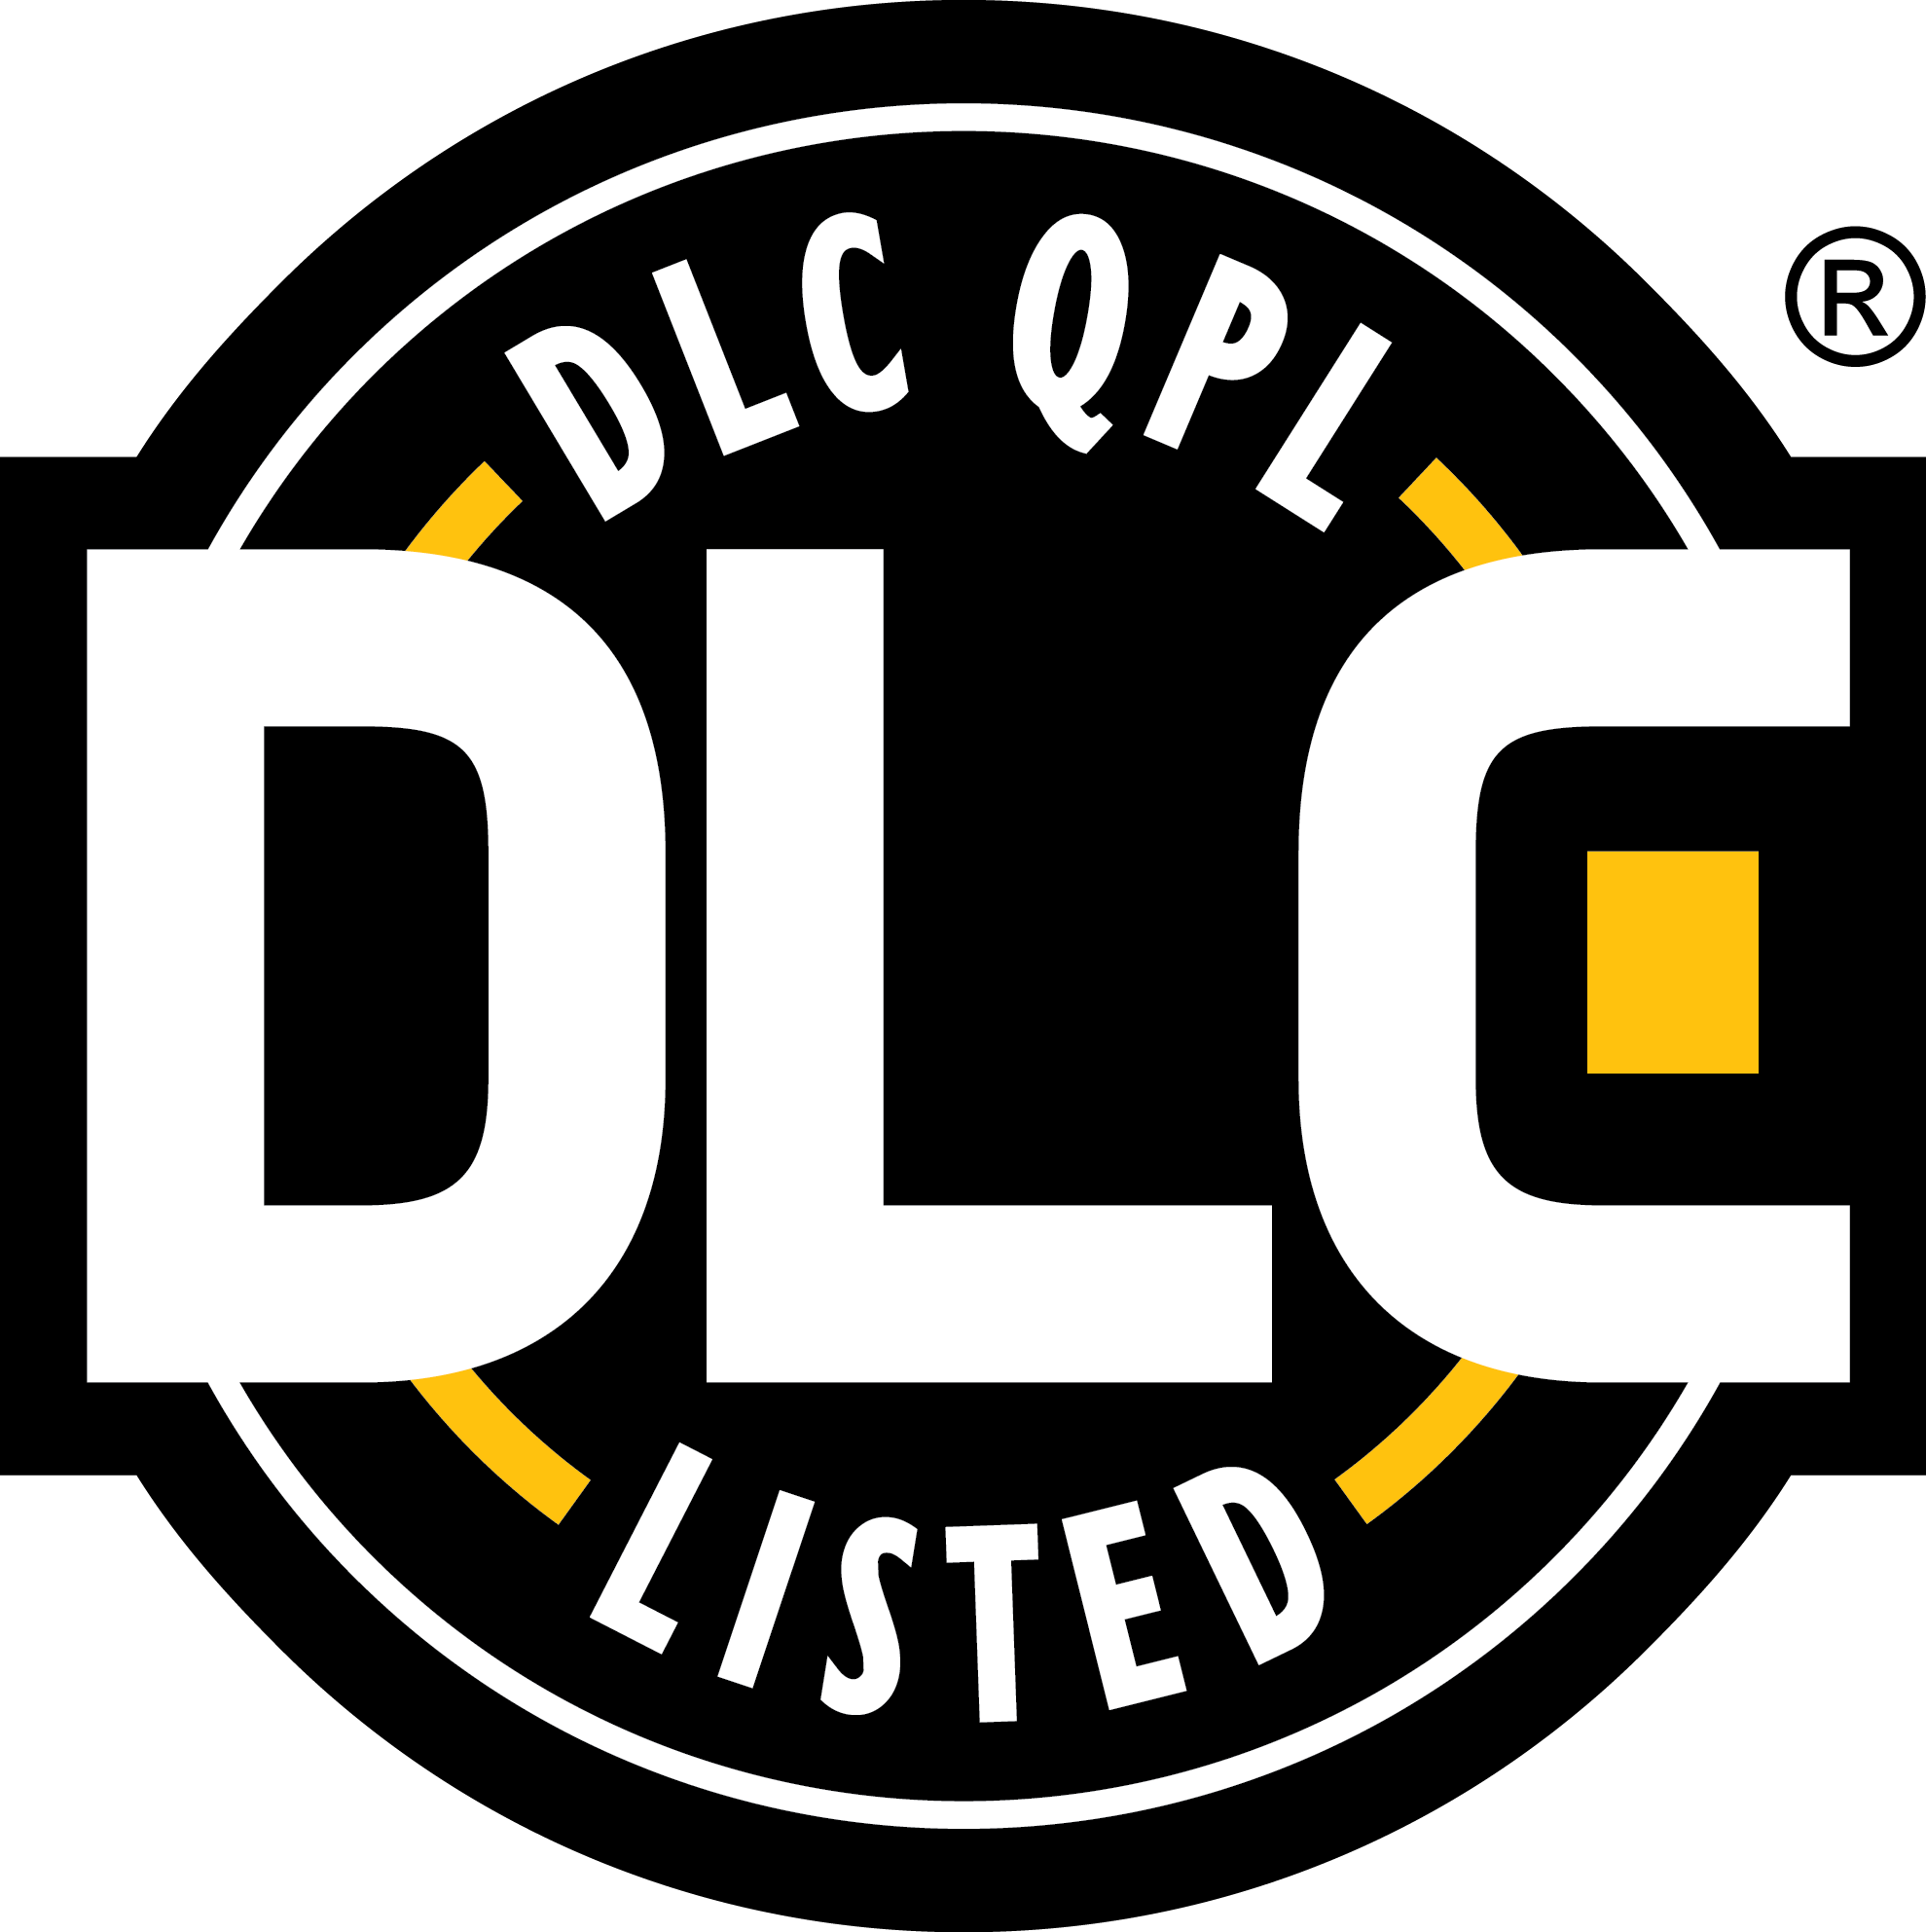 DLC listed